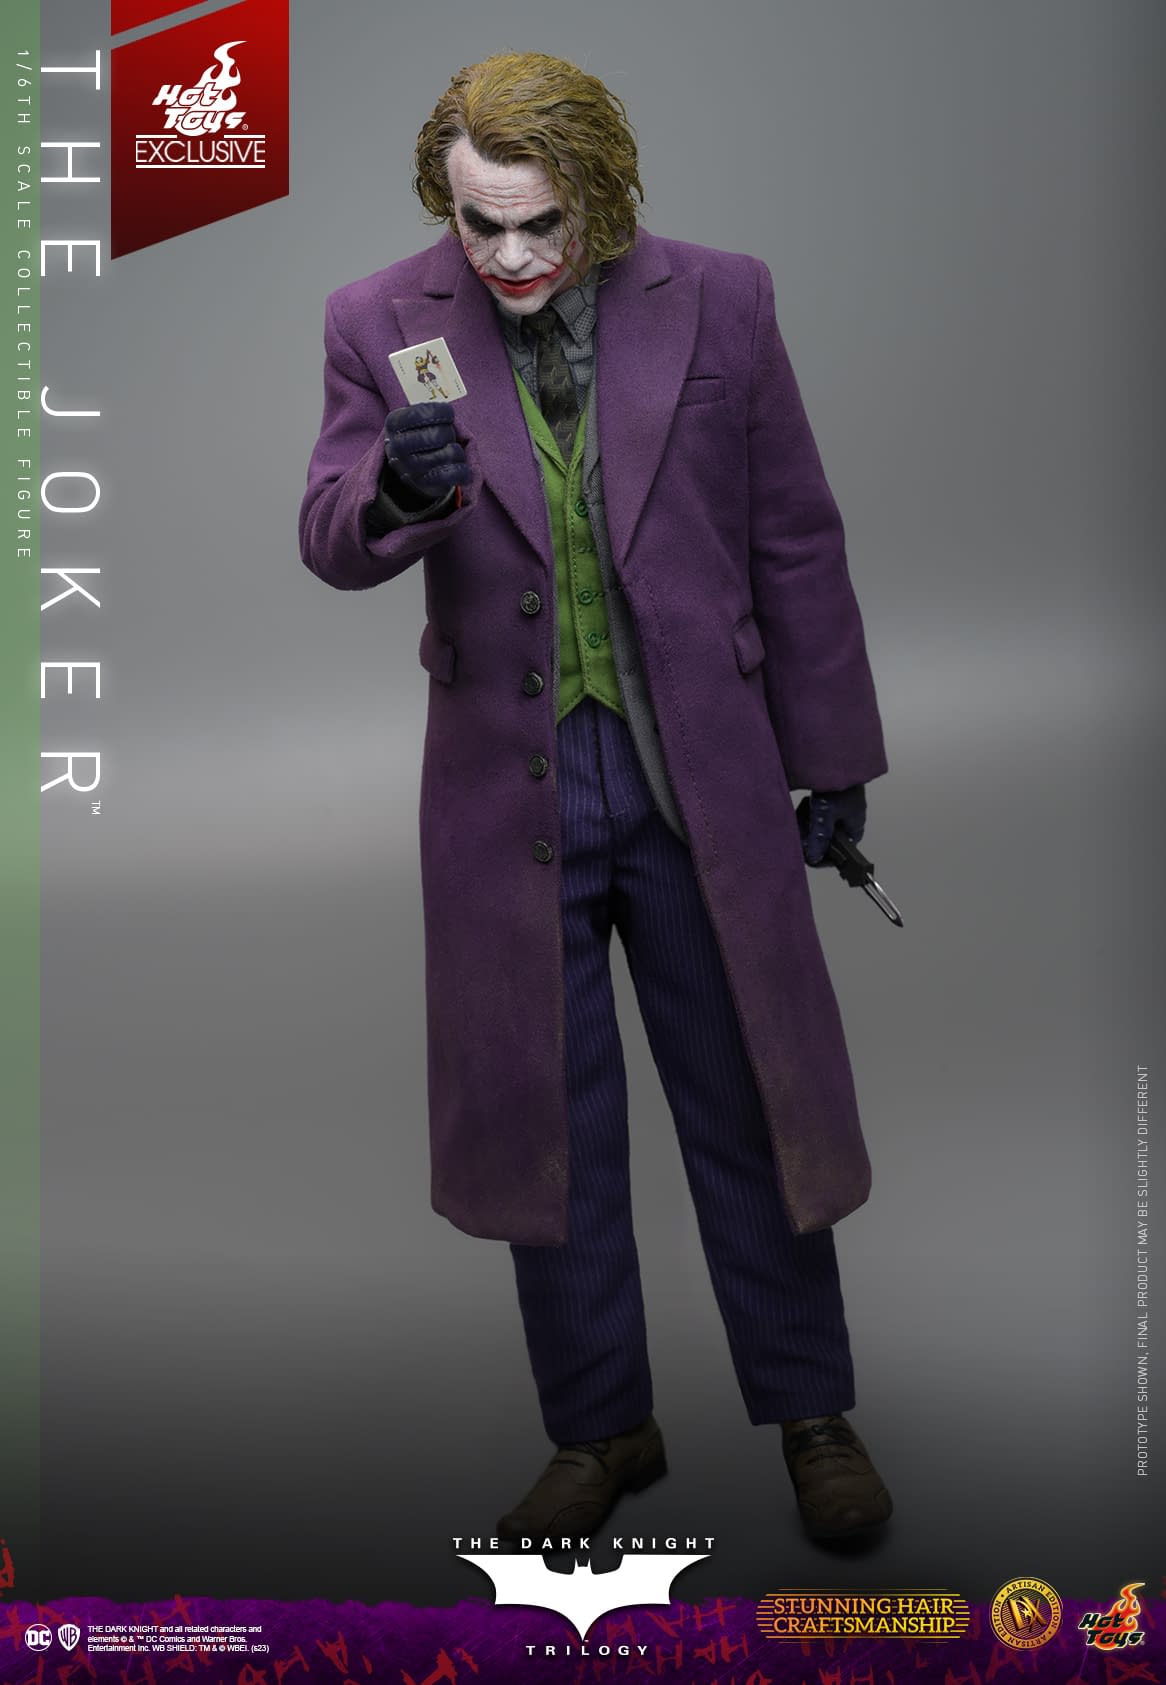 Hot Toys Announces 1/6 Scale Artisan The Dark Knight The Joker